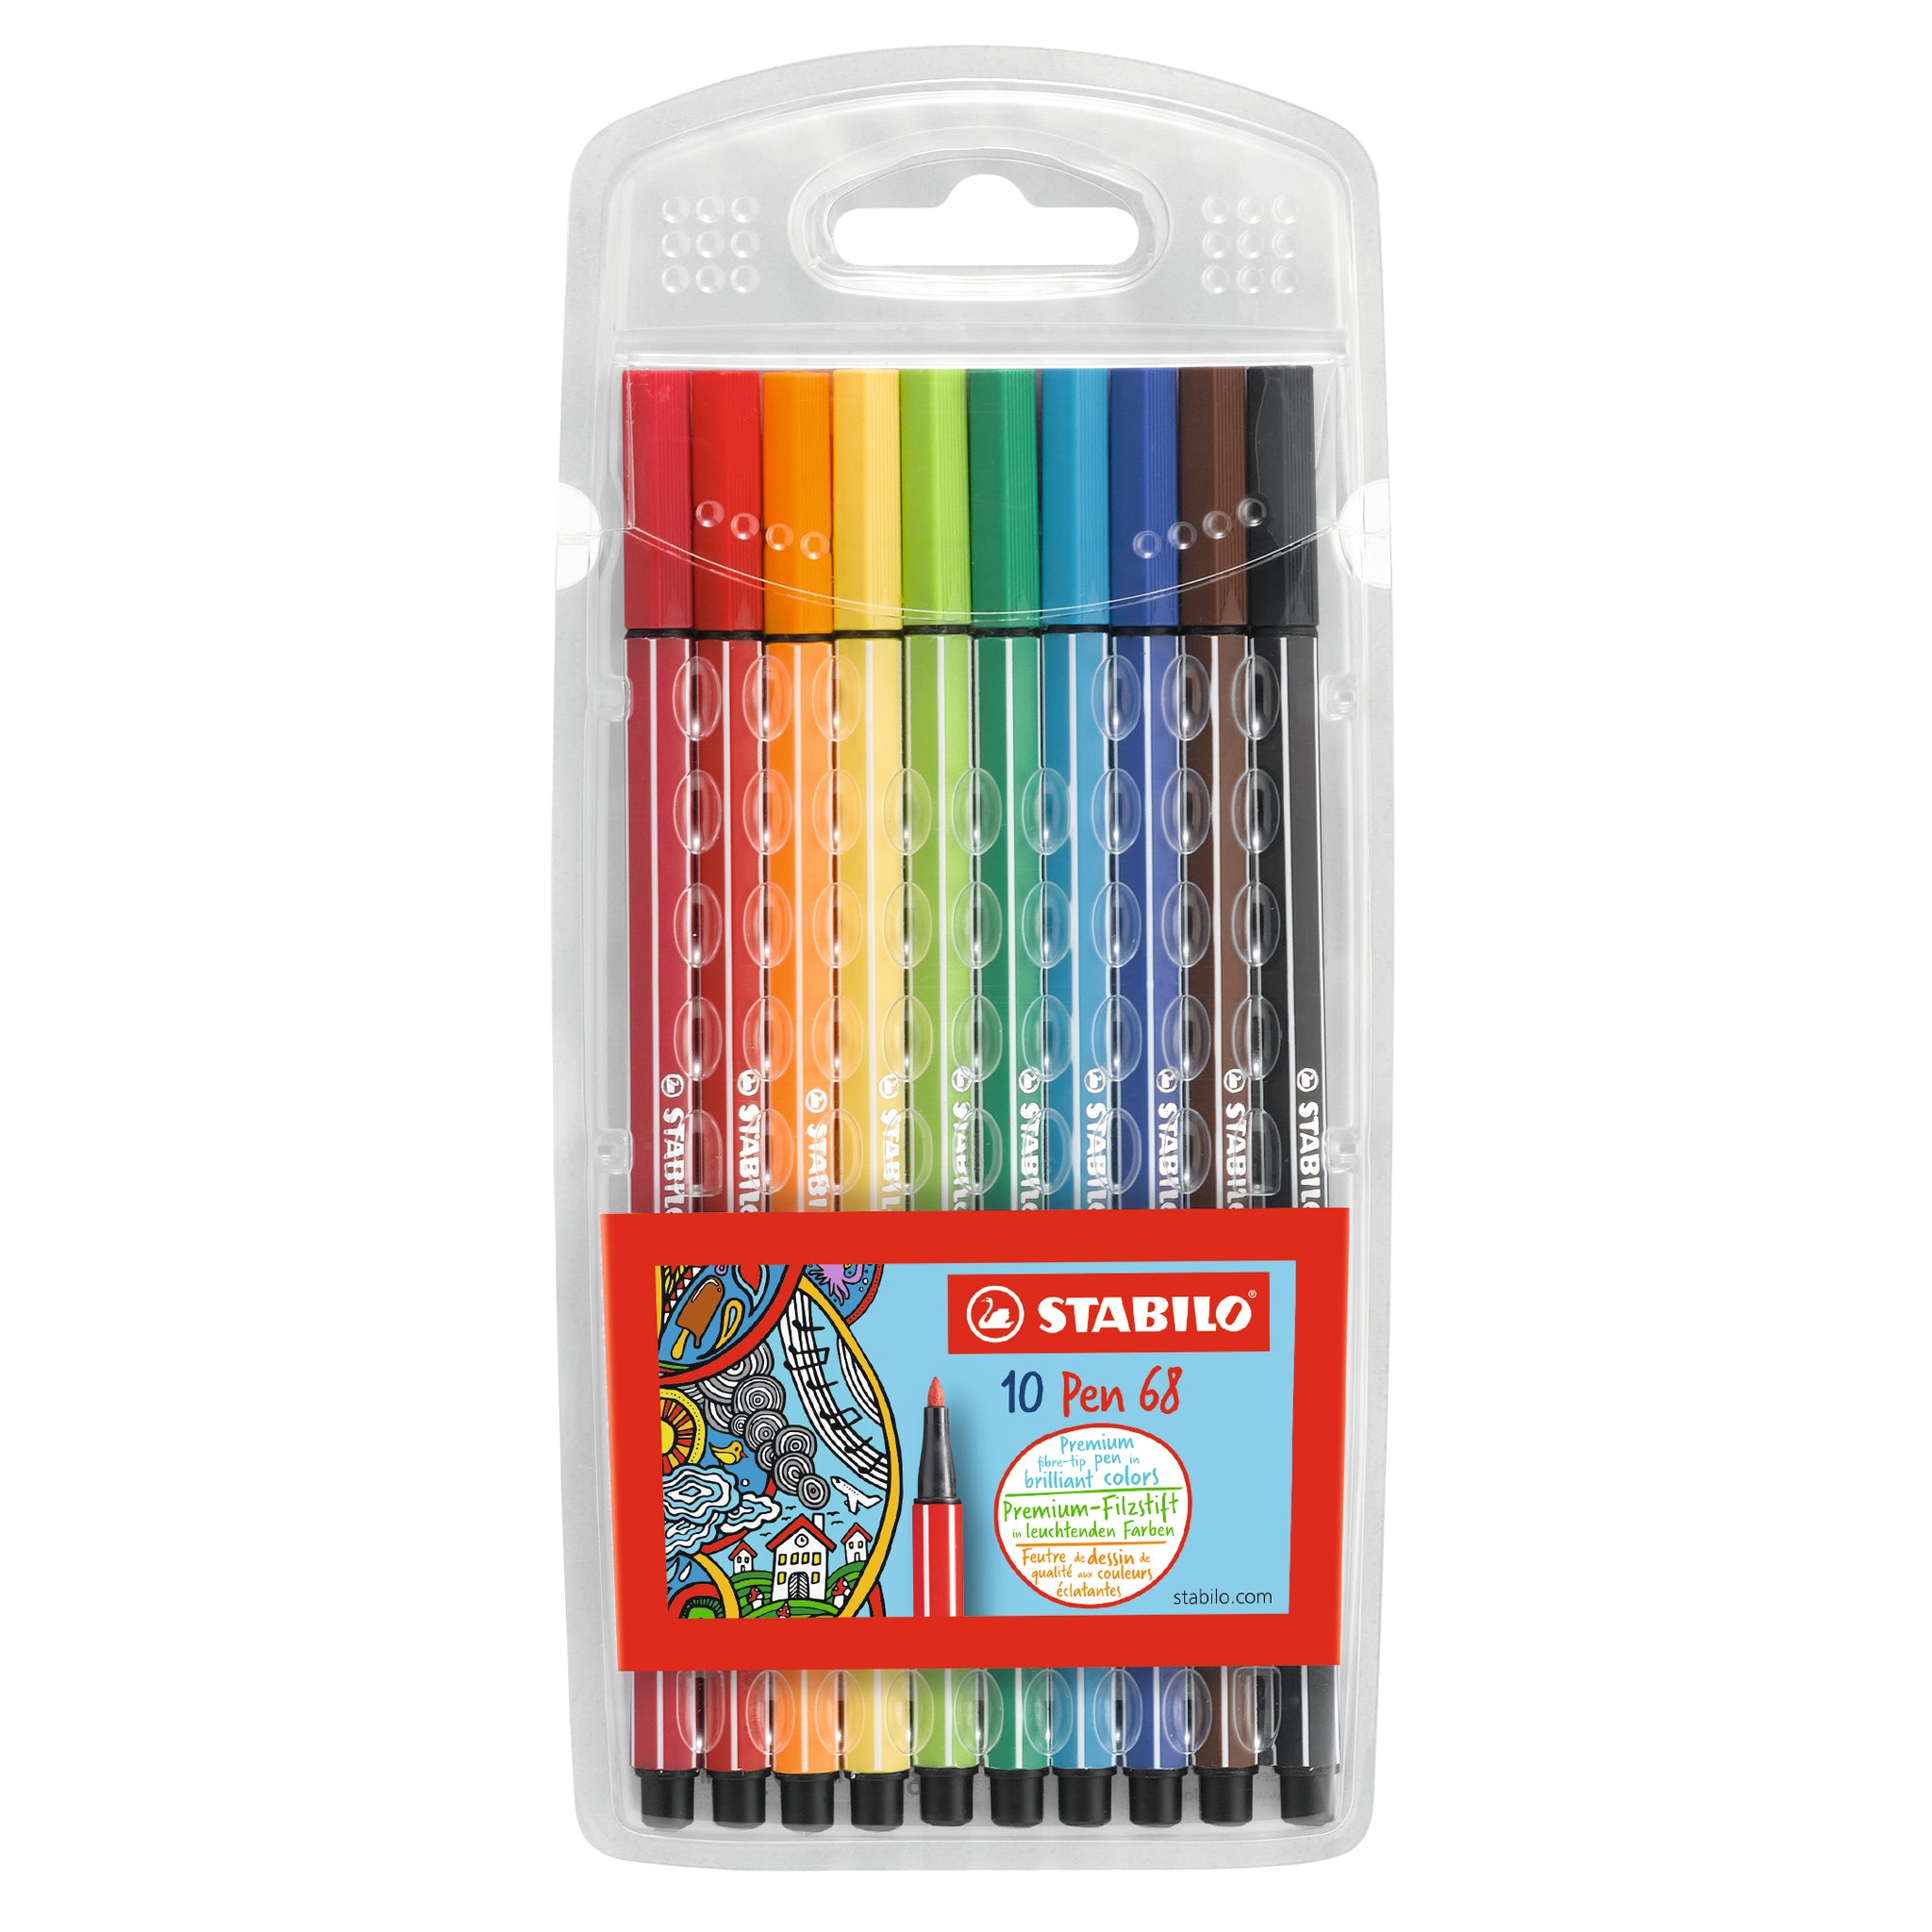 Stabilo Pen 68 Wallet 10 Color Set